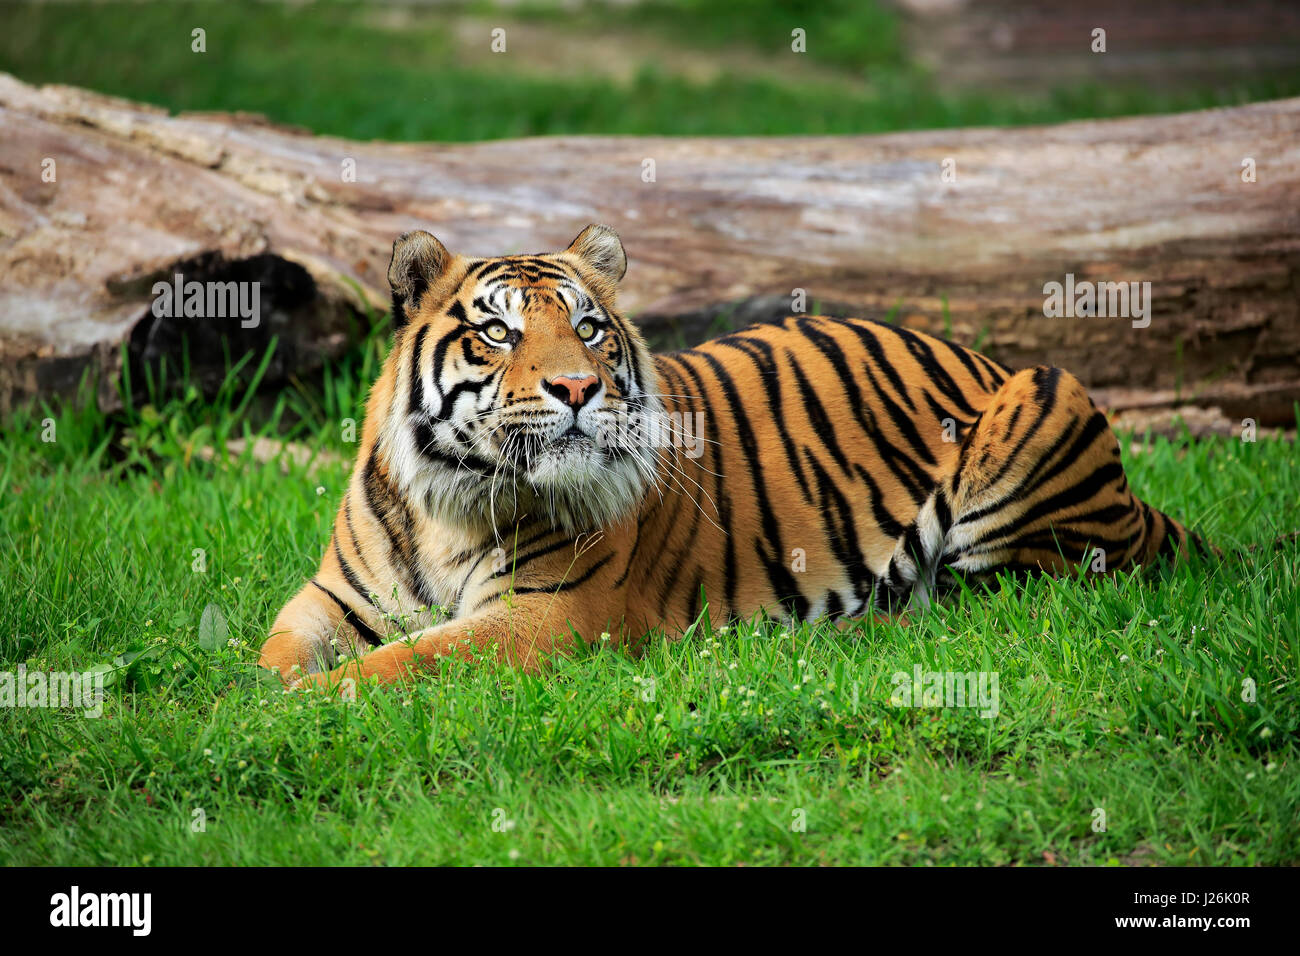 Tigre de Sumatra (Panthera tigris sumatrae), mâle adulte, alerte, survenue à Sumatra, l'Asie, captive Banque D'Images